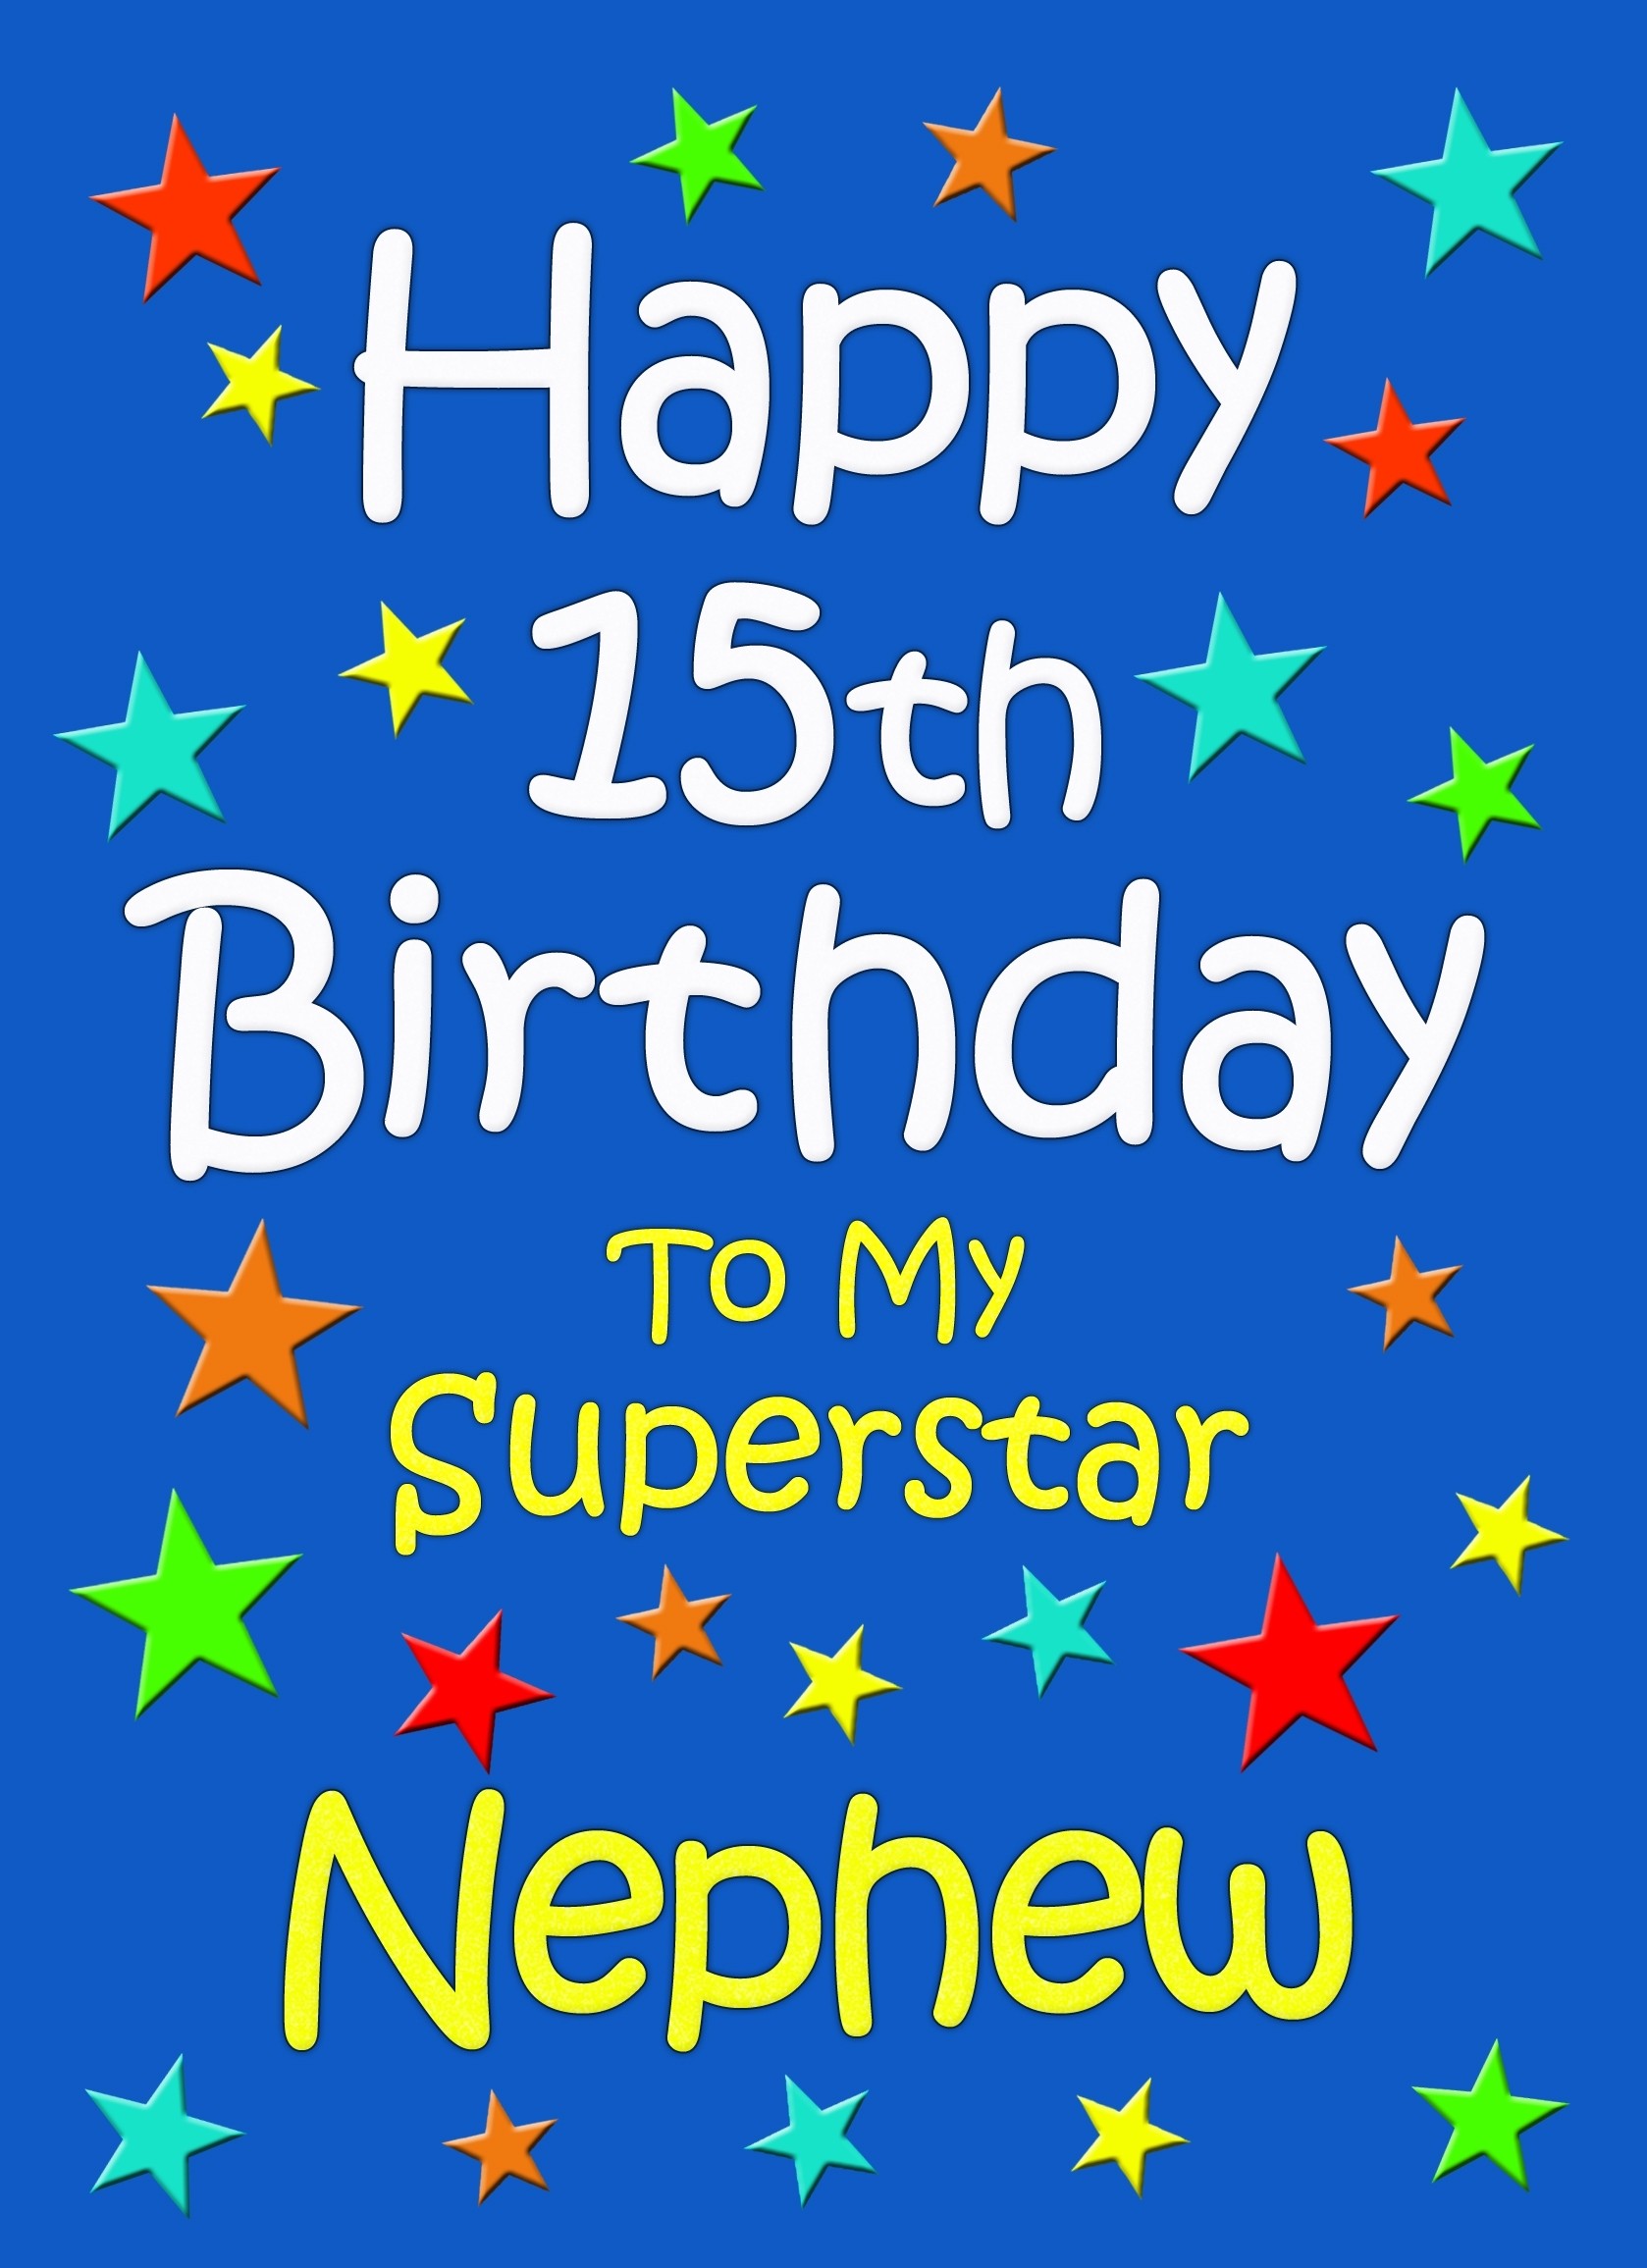 Nephew 15th Birthday Card (Blue)